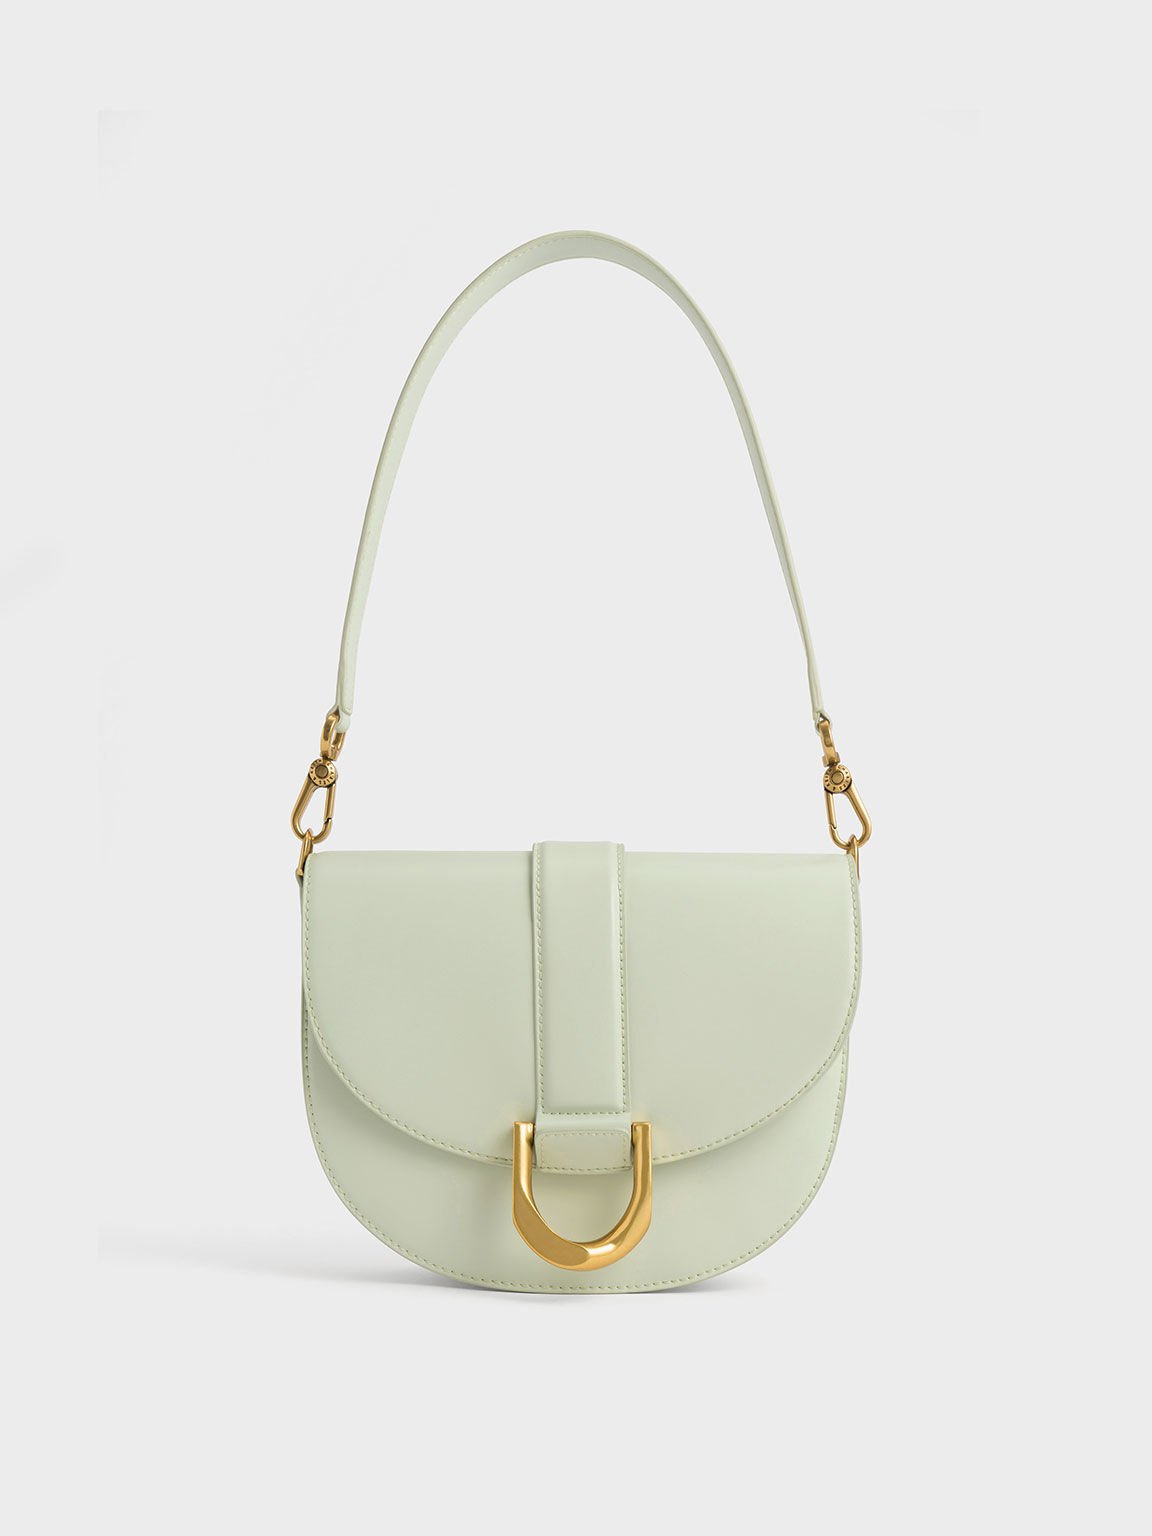 Shoppers Say This $22 Saddle Shoulder Bag Looks Just Like a Popular Designer  Style